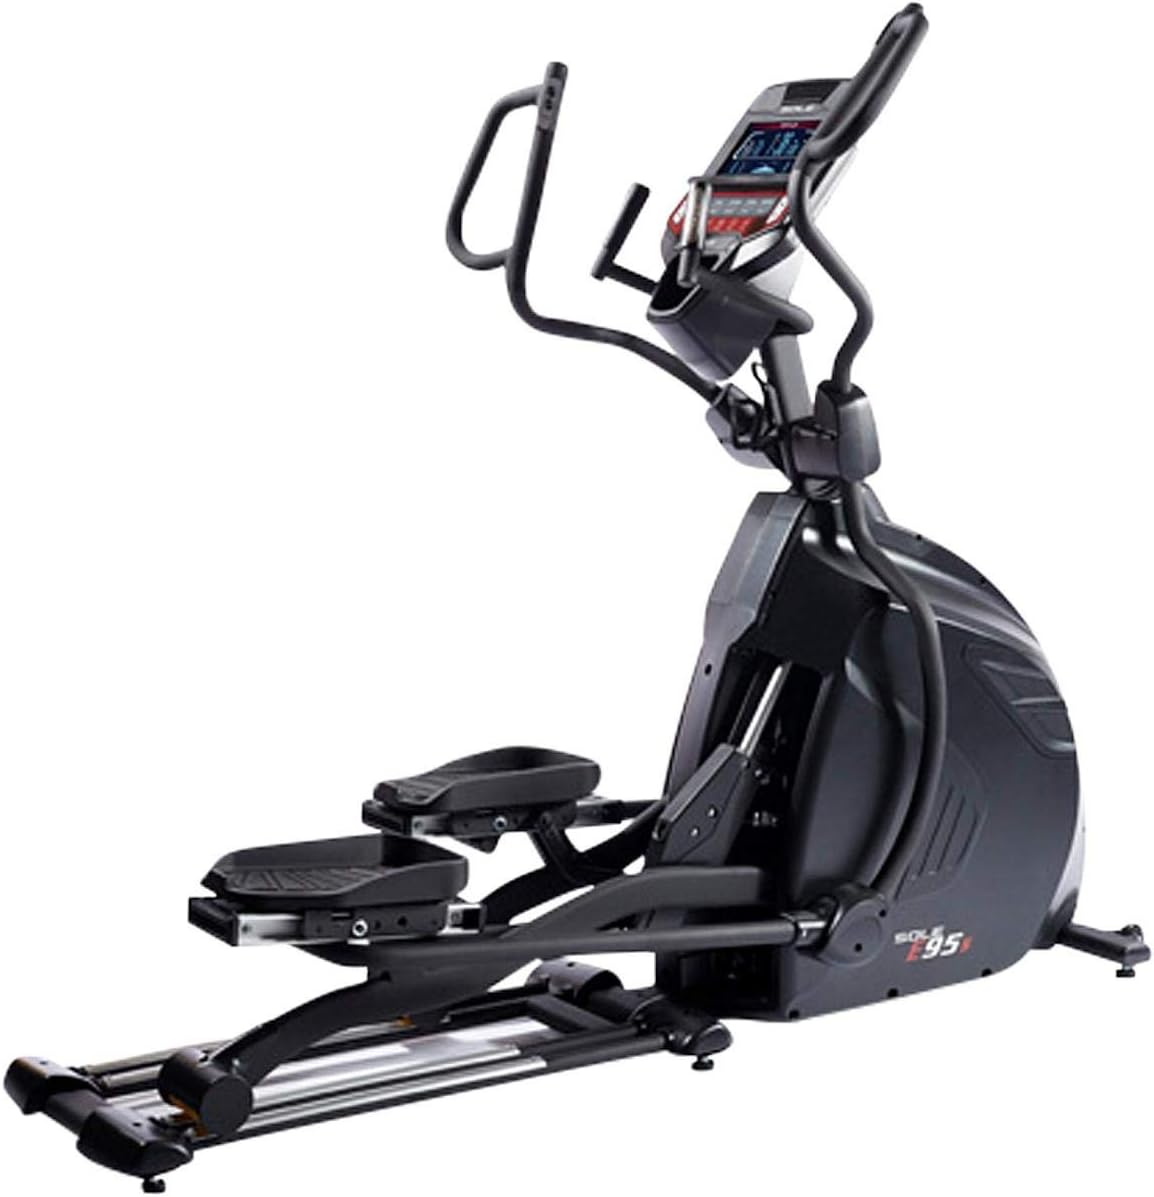 sole fitness e35 model elliptical machine review